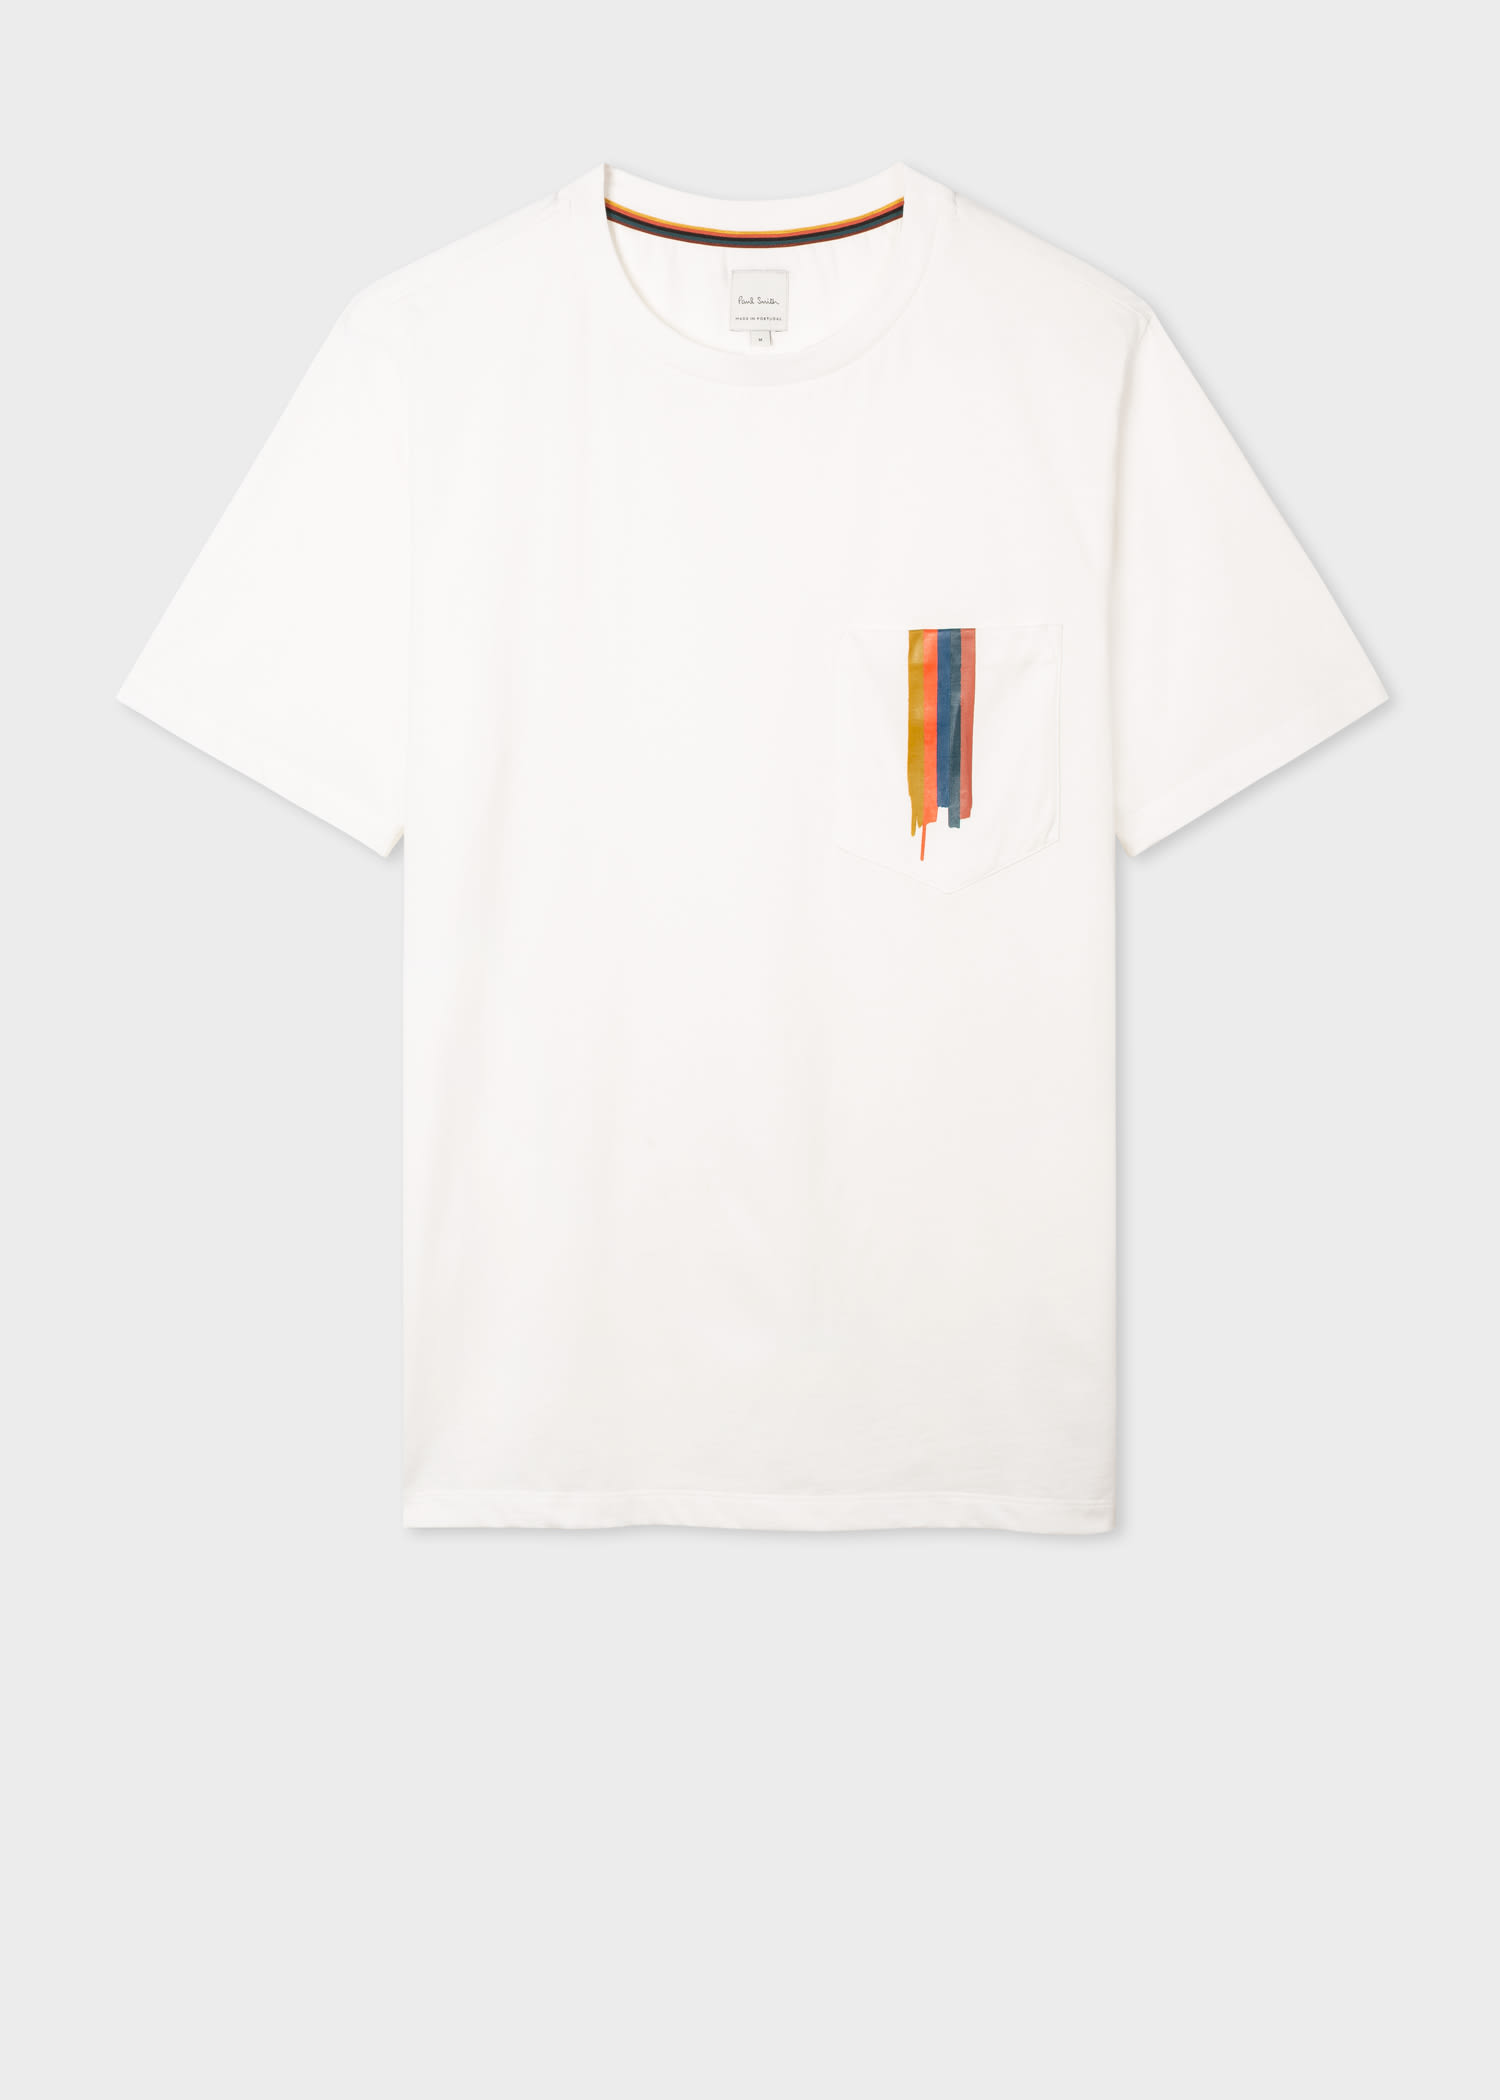 T-Shirts | Printed, Plain, Long Sleeve - Paul Smith